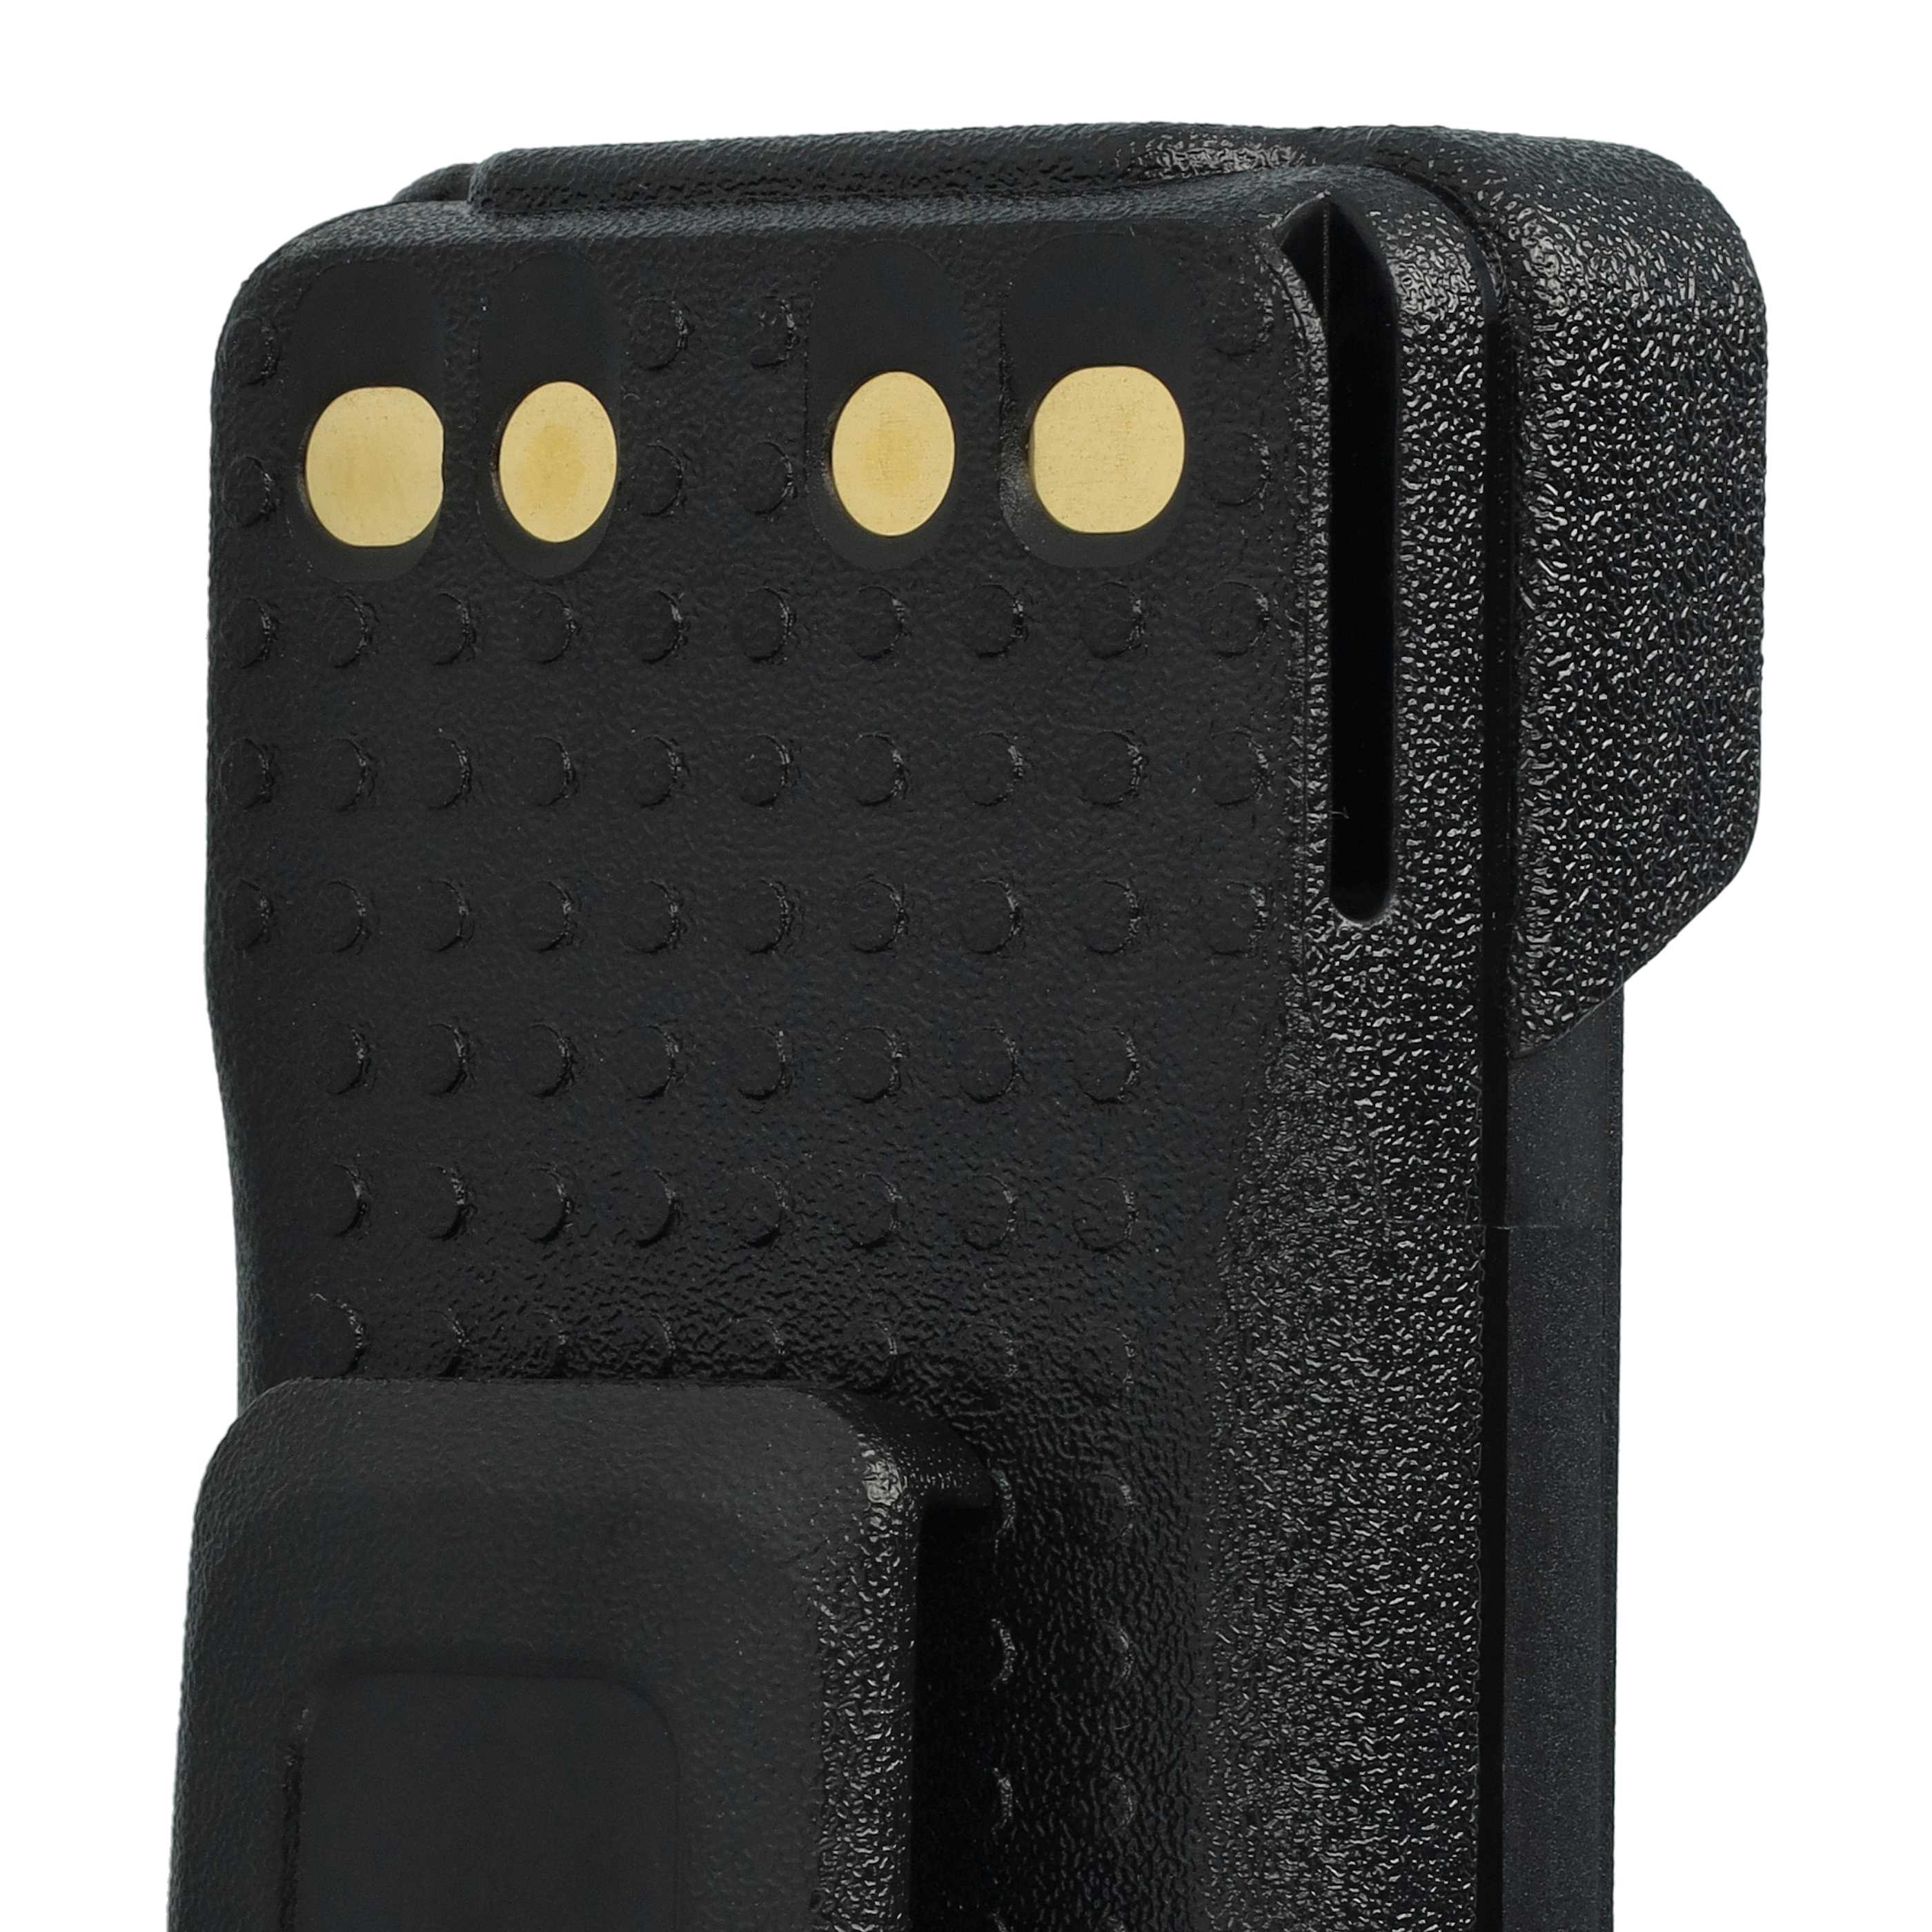 Akumulator do radiotelefonu zamiennik Motorola PMNN4415, PMNN441 - 1800 mAh 7,4 V Li-Ion + klips na pasek